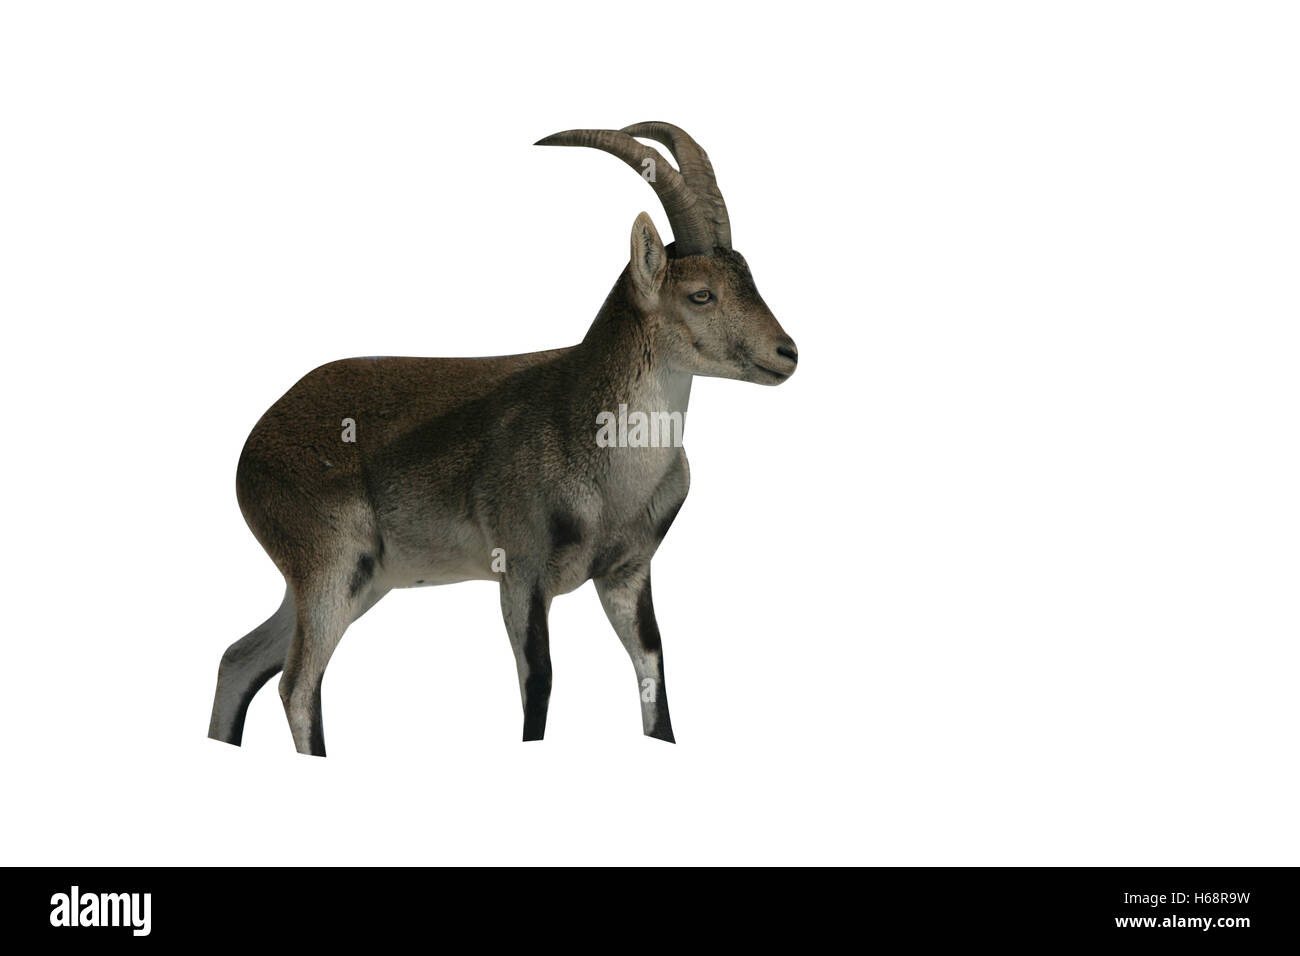 Spanish or Iberian ibex, Capra pyrenaica, single mammal in Spain, winter Stock Photo